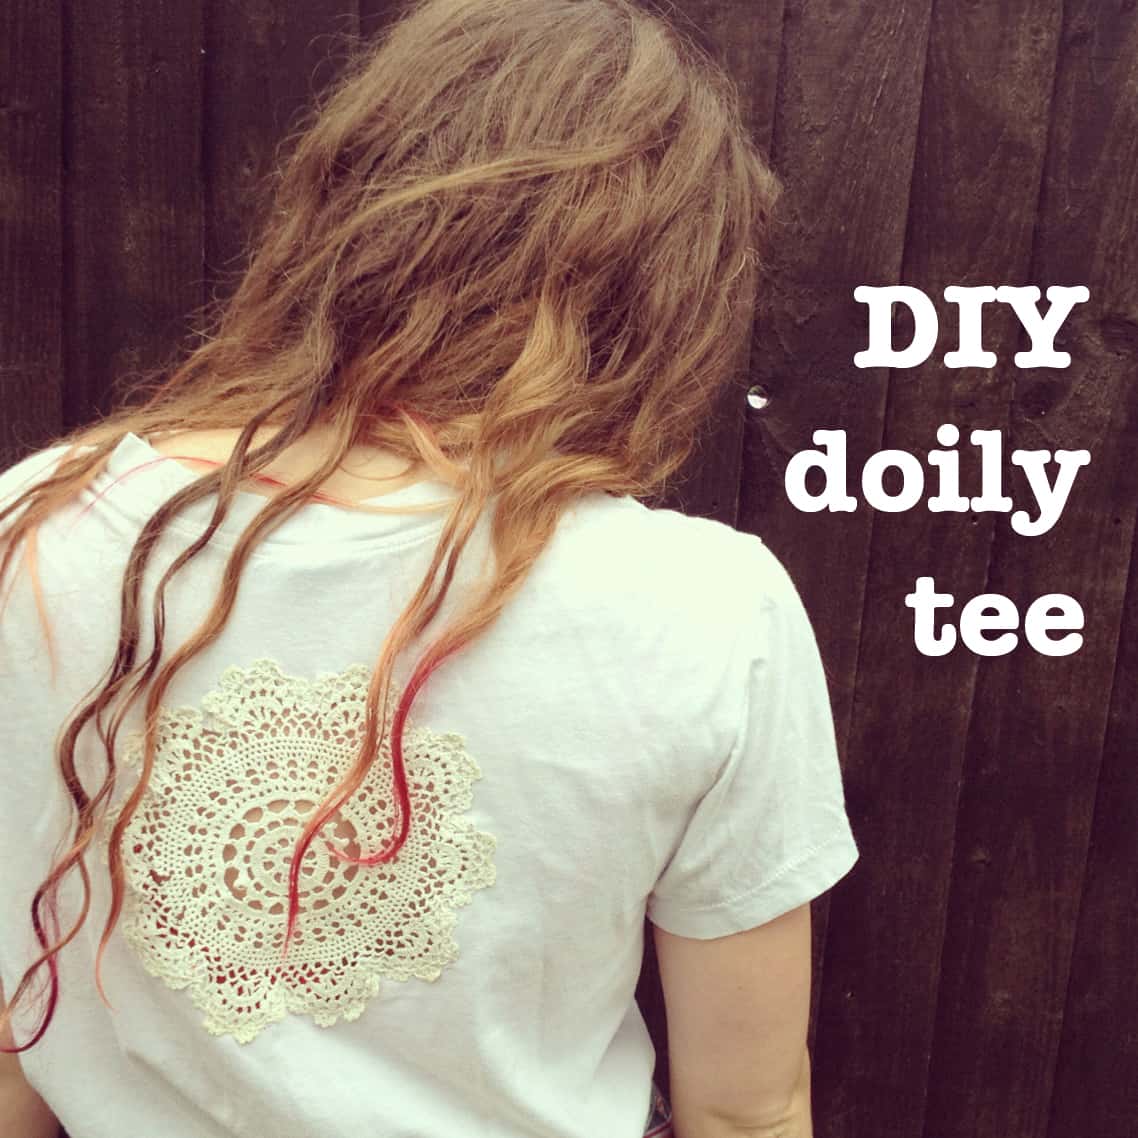 Lace doily t-shirt